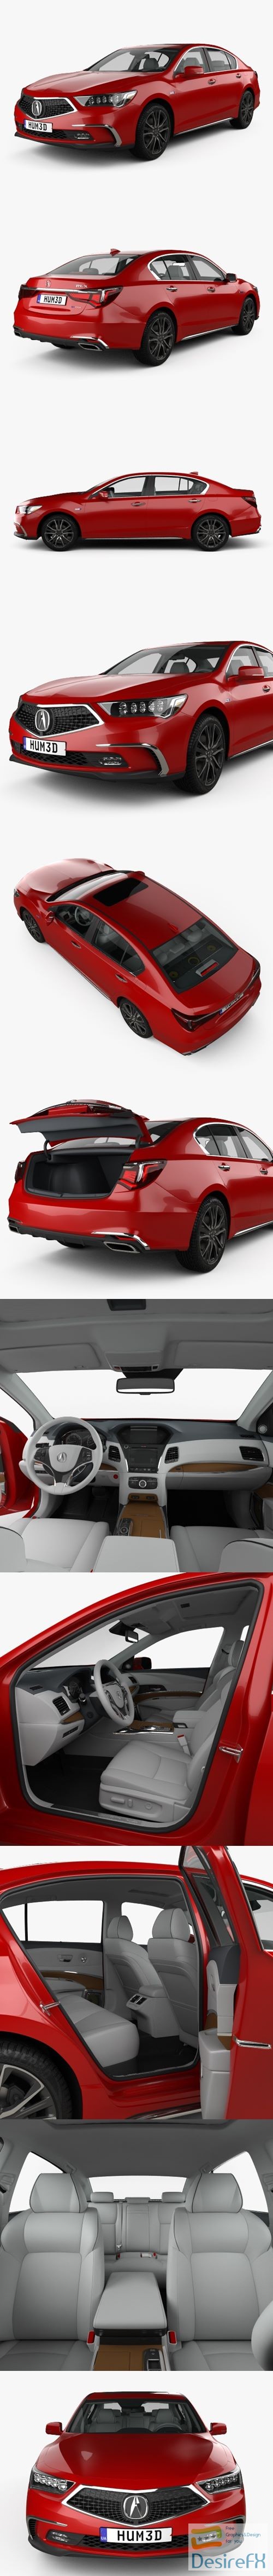 Acura RLX Sport Hybrid SH-AWD with HQ interior 2017 3D Model